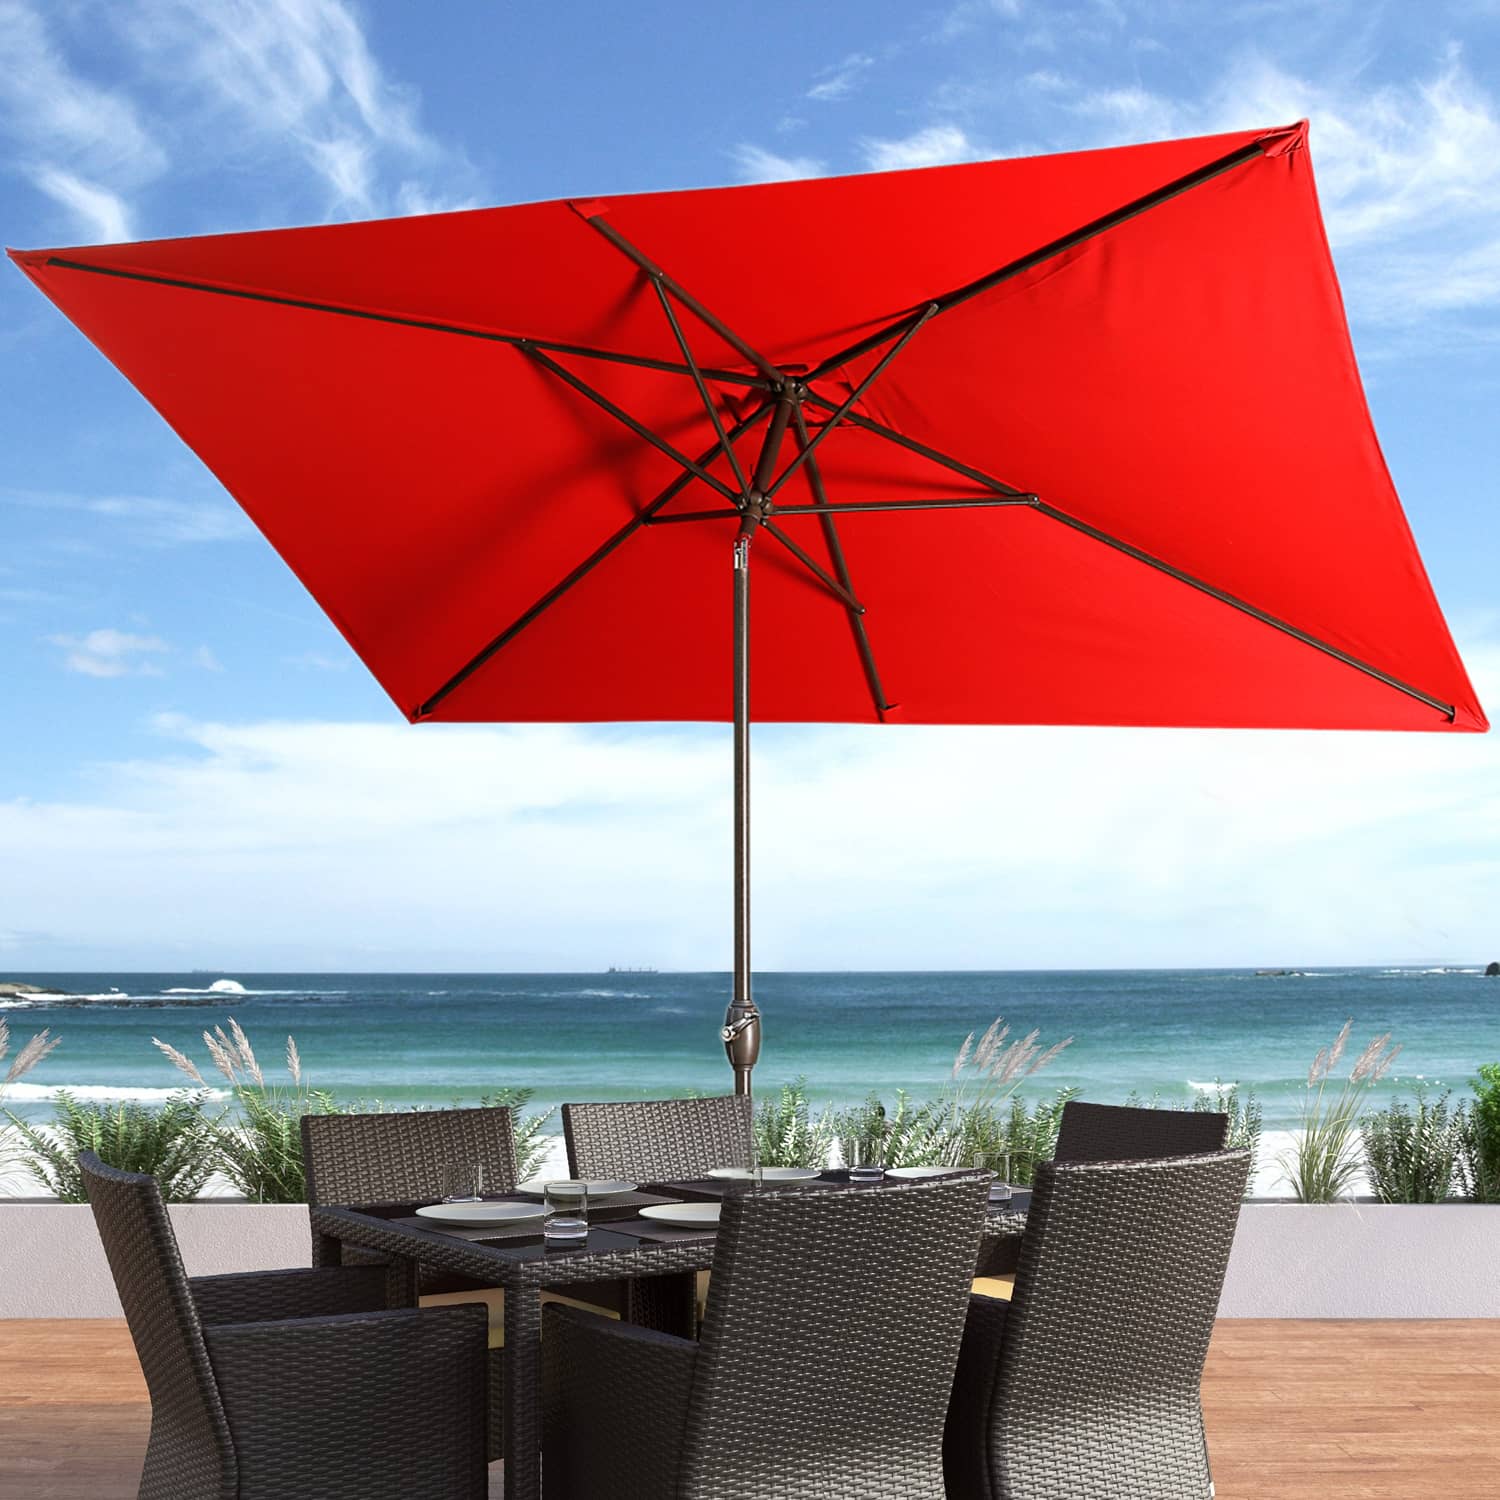 CASAINC 10' Aluminum Rectangular Market Patio Umbrella in Red Without Base